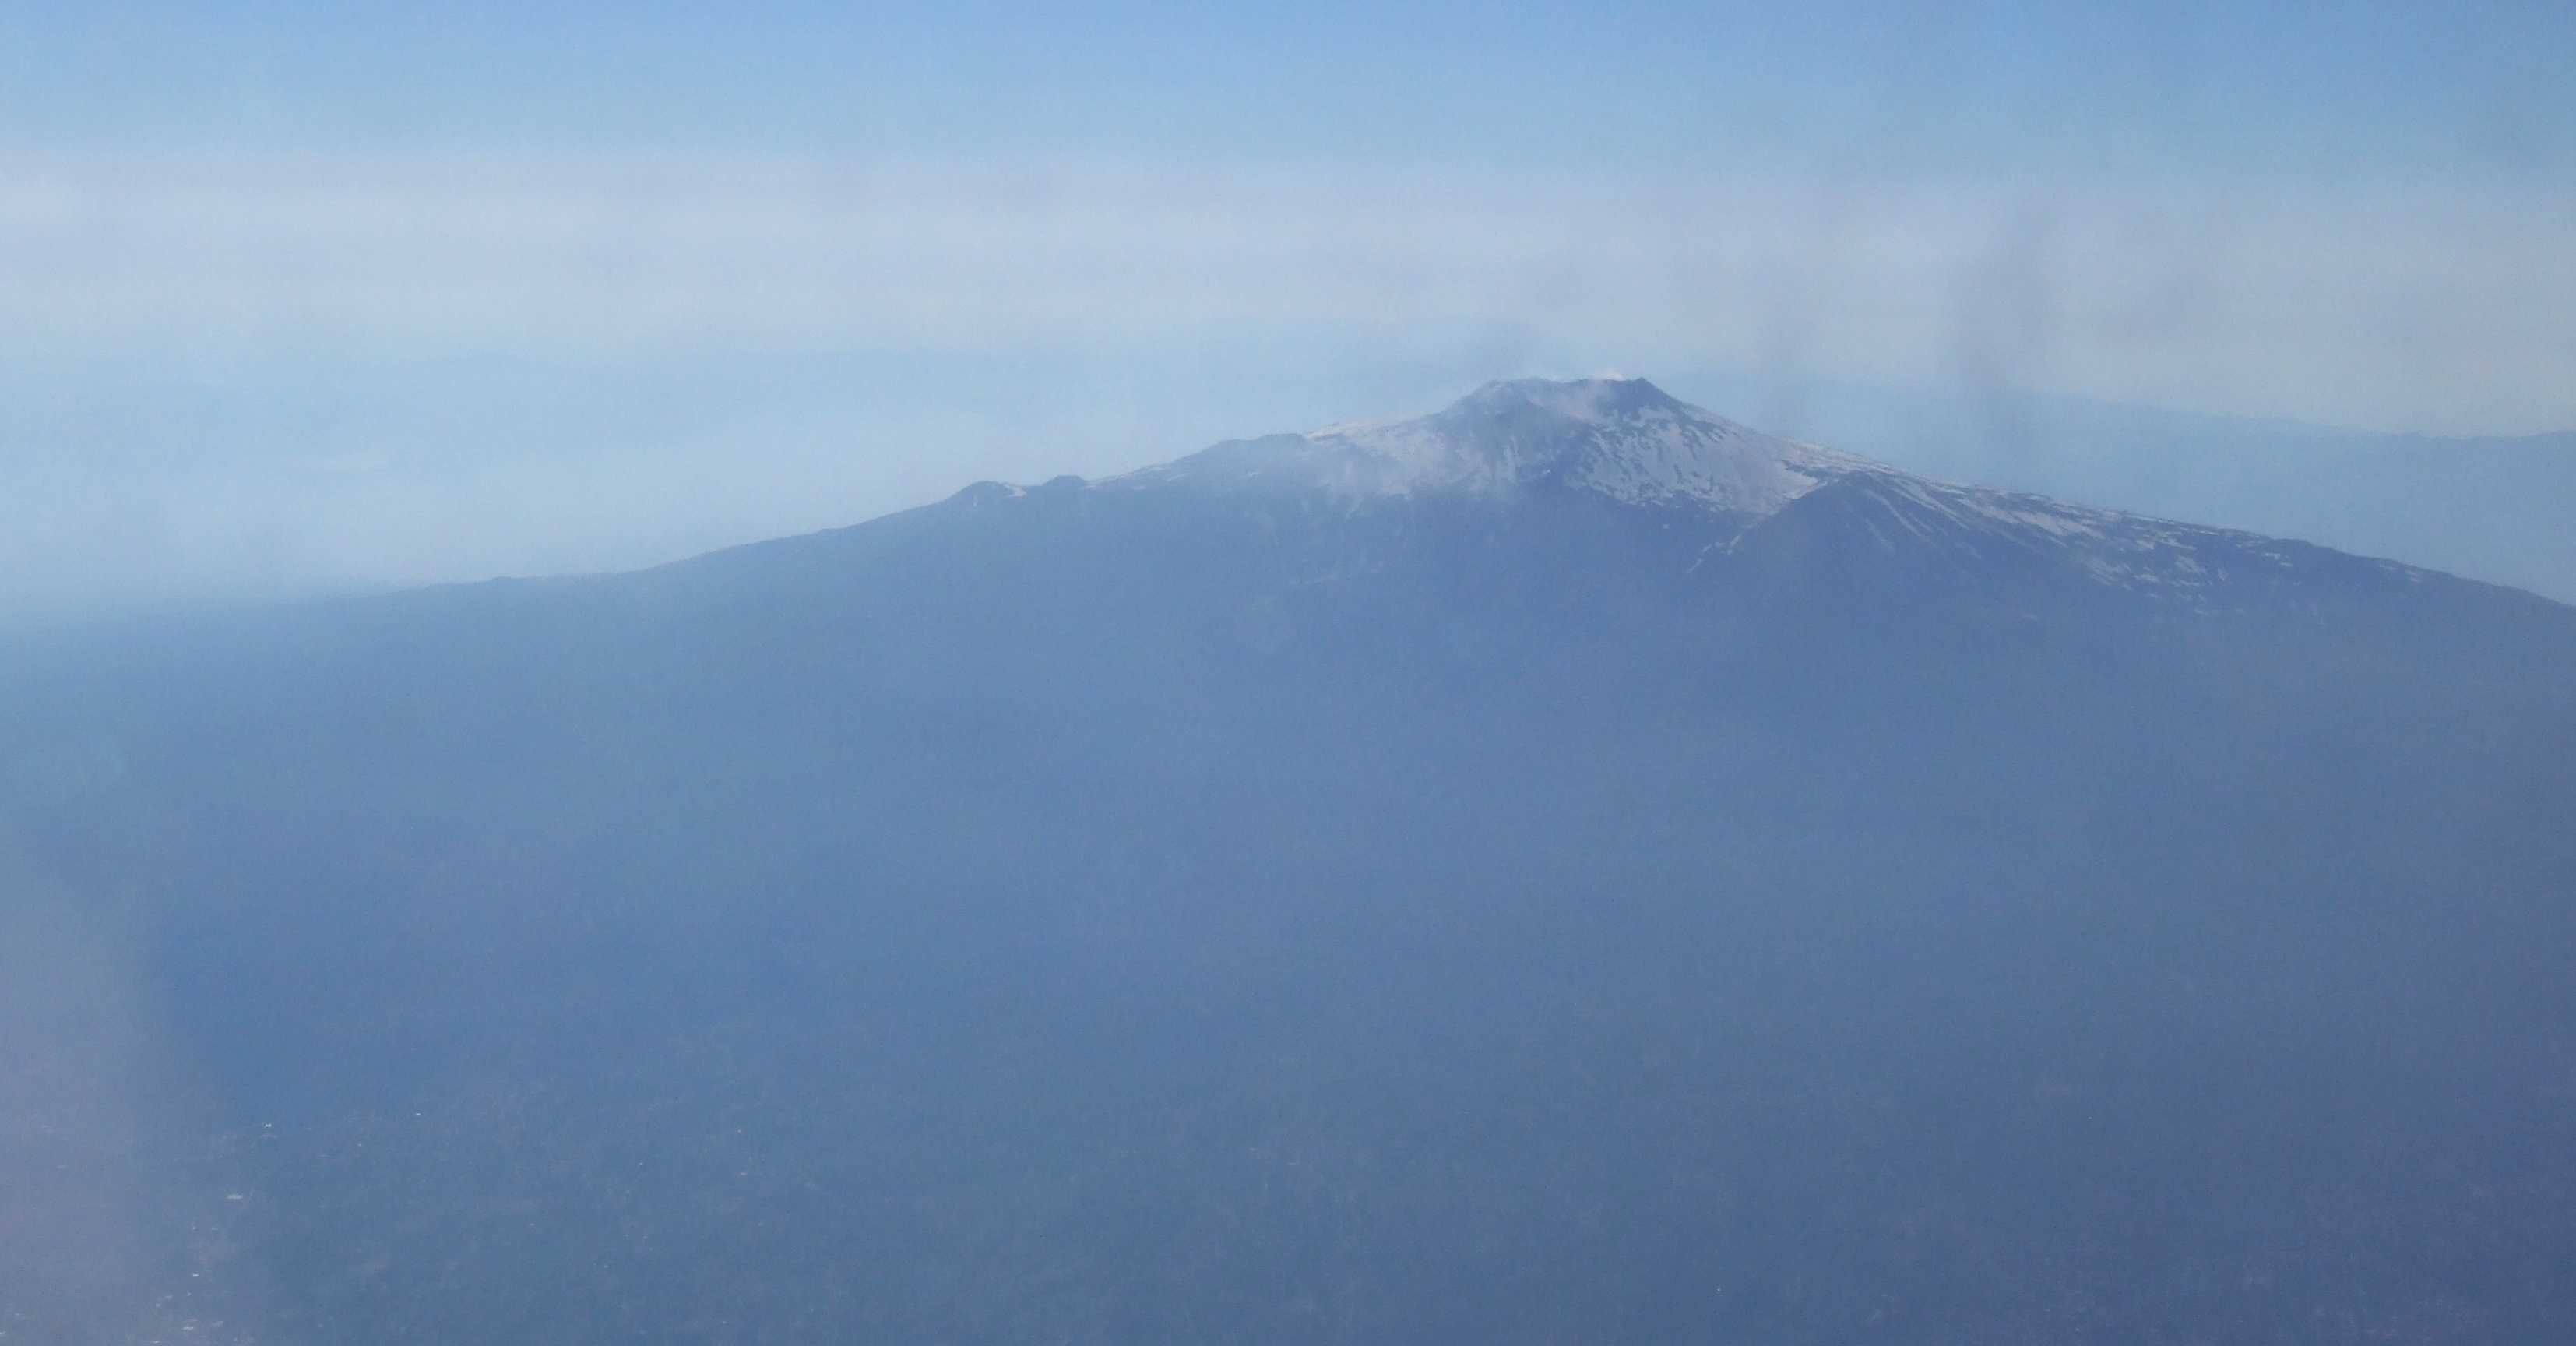 Etna Volcano Sicilia Italy - Creative Commons by gnuckx, Bebo, Picture, Monochrome, Mountain, HQ Photo